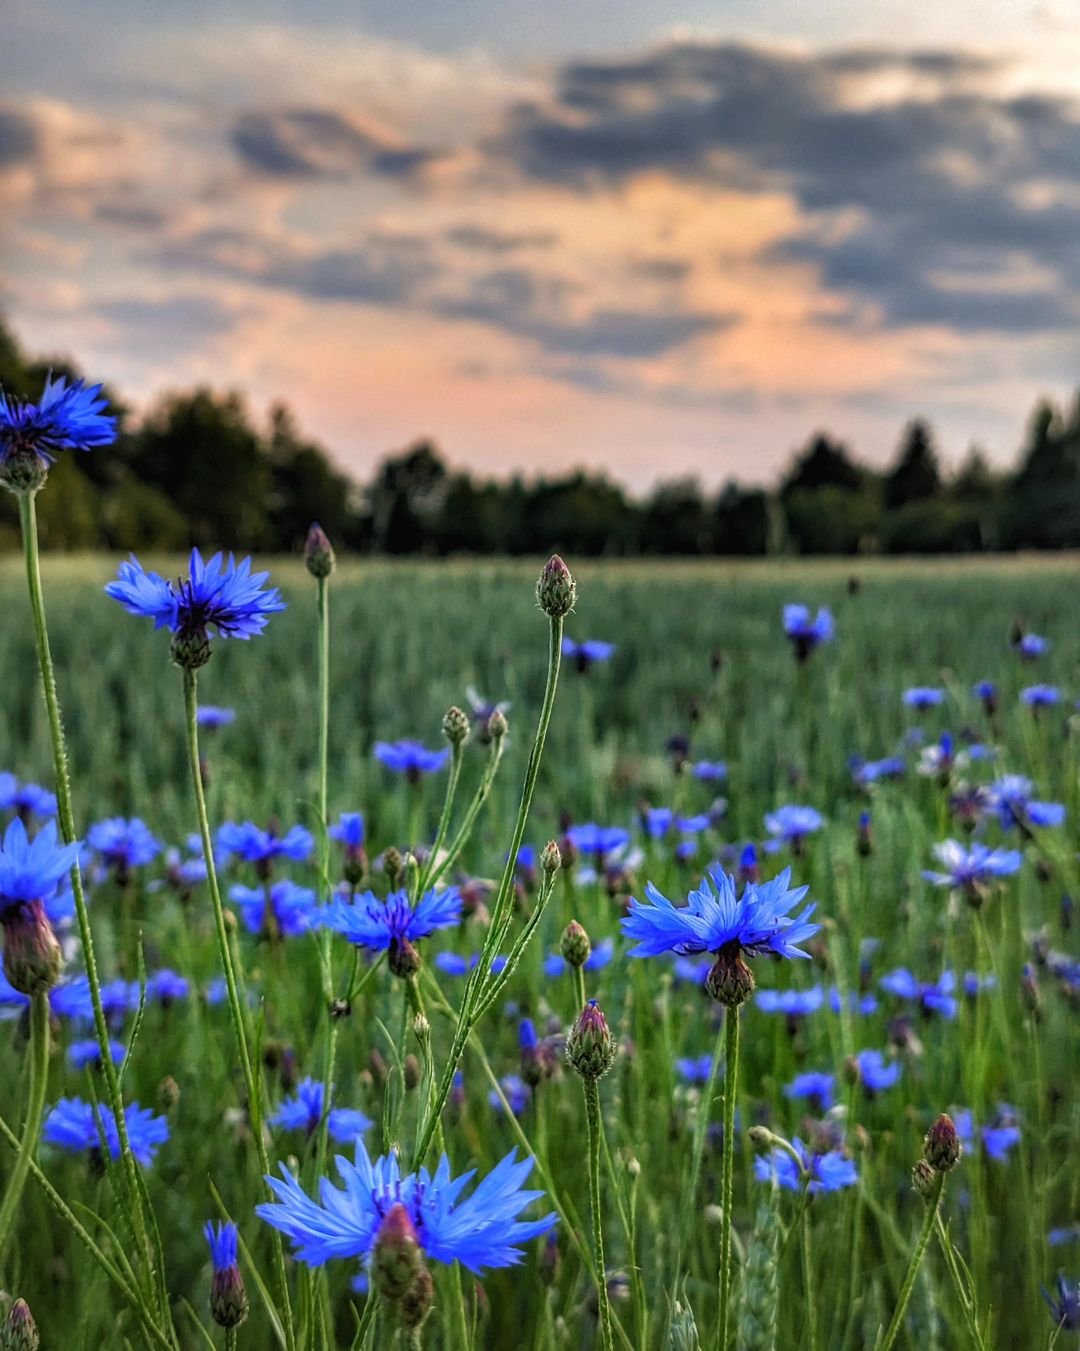 Vibrant blue cornflowers in a field under the setting sun.